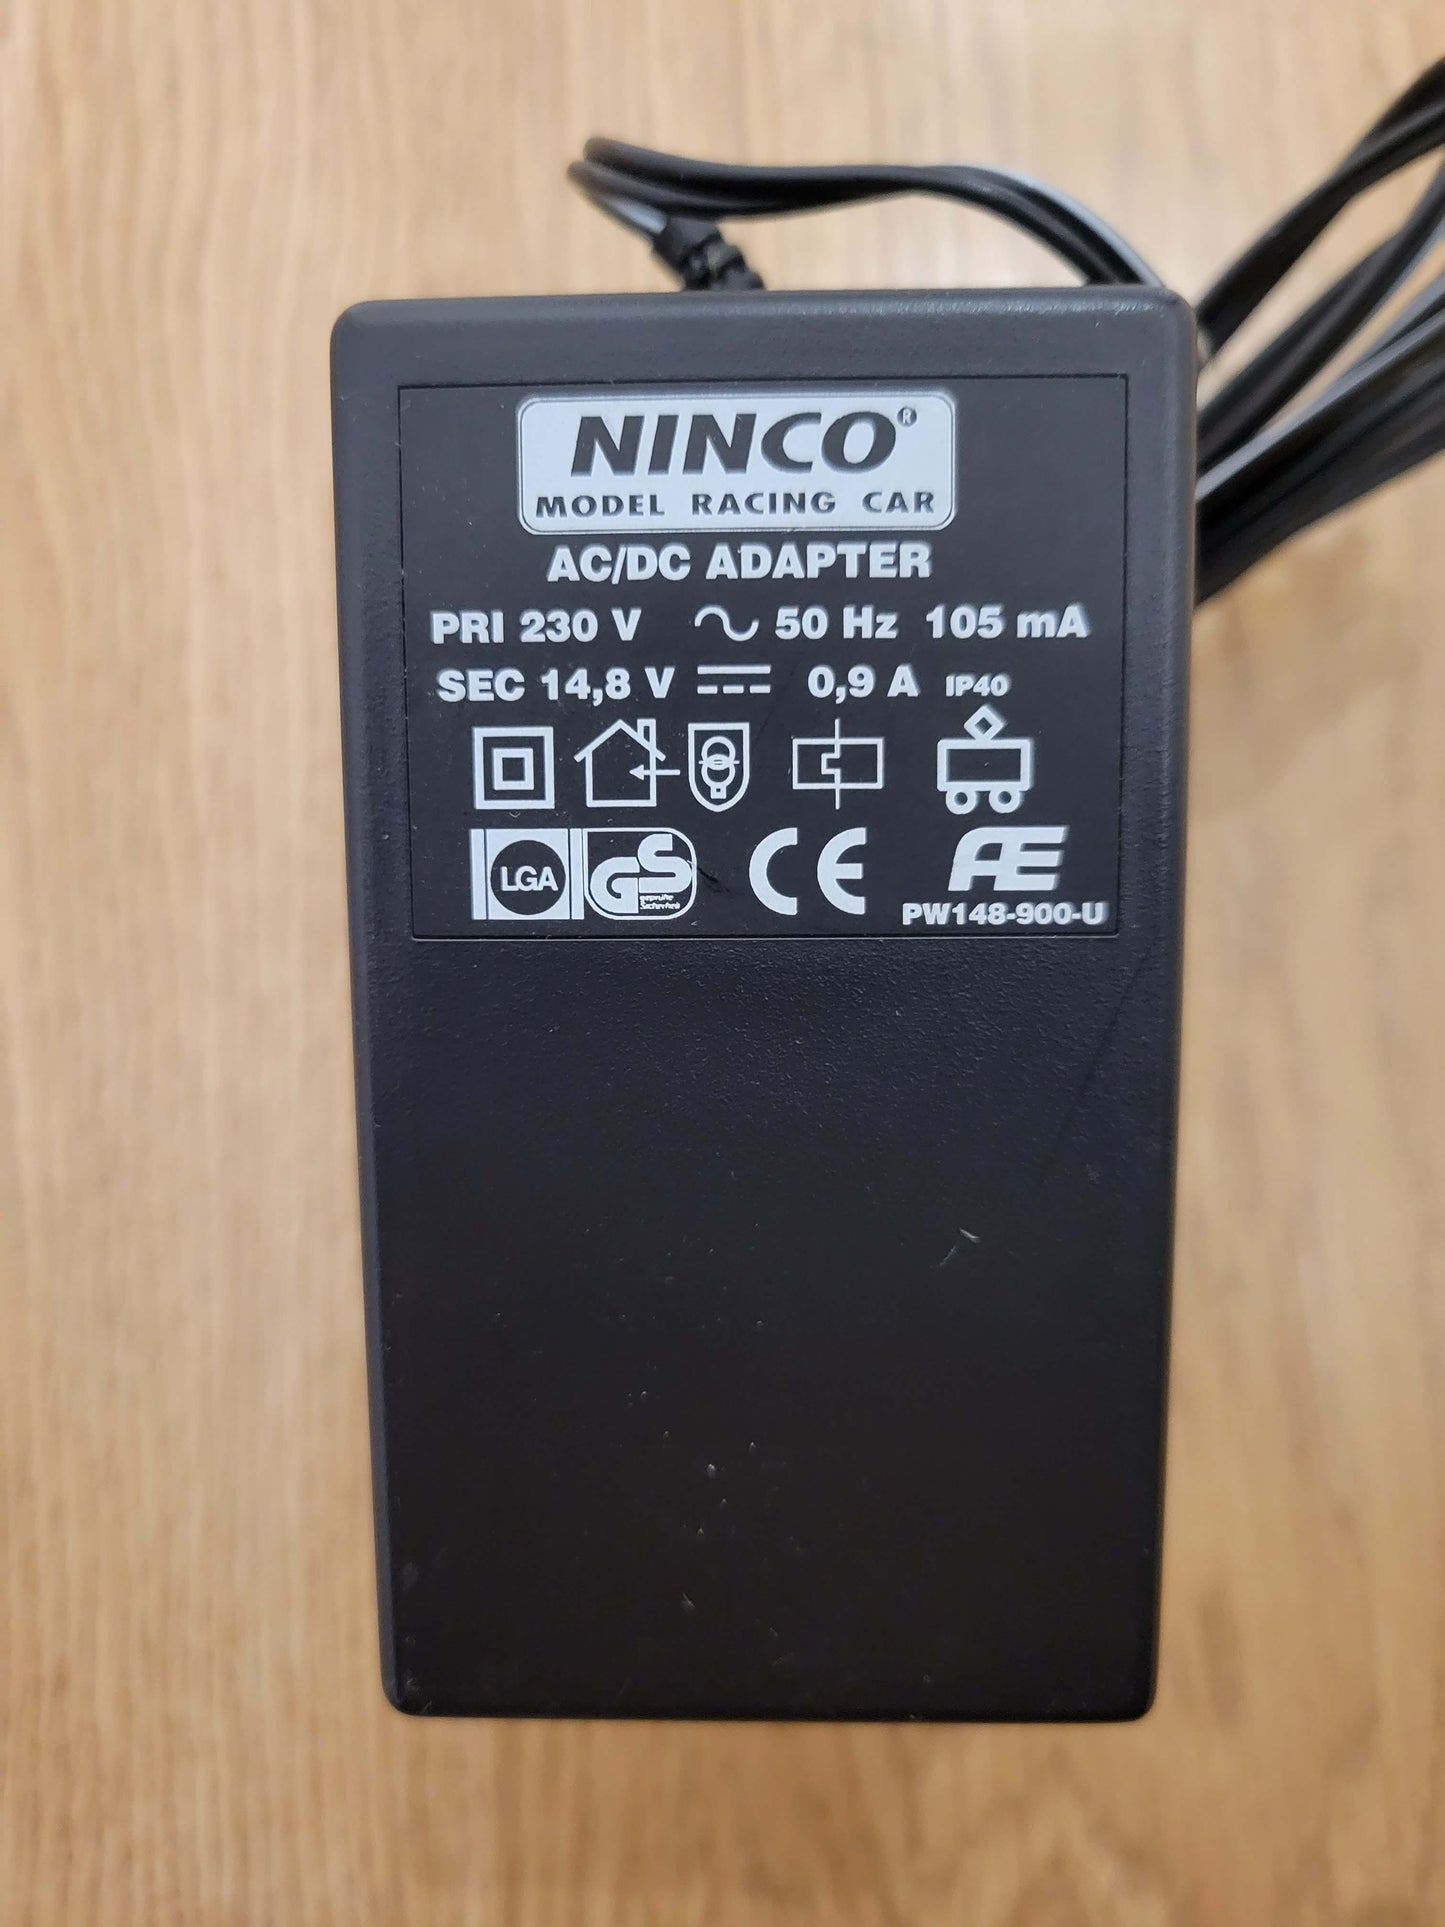 NINCO PW148-900-U Mains Power Supply Transformer Adaptor